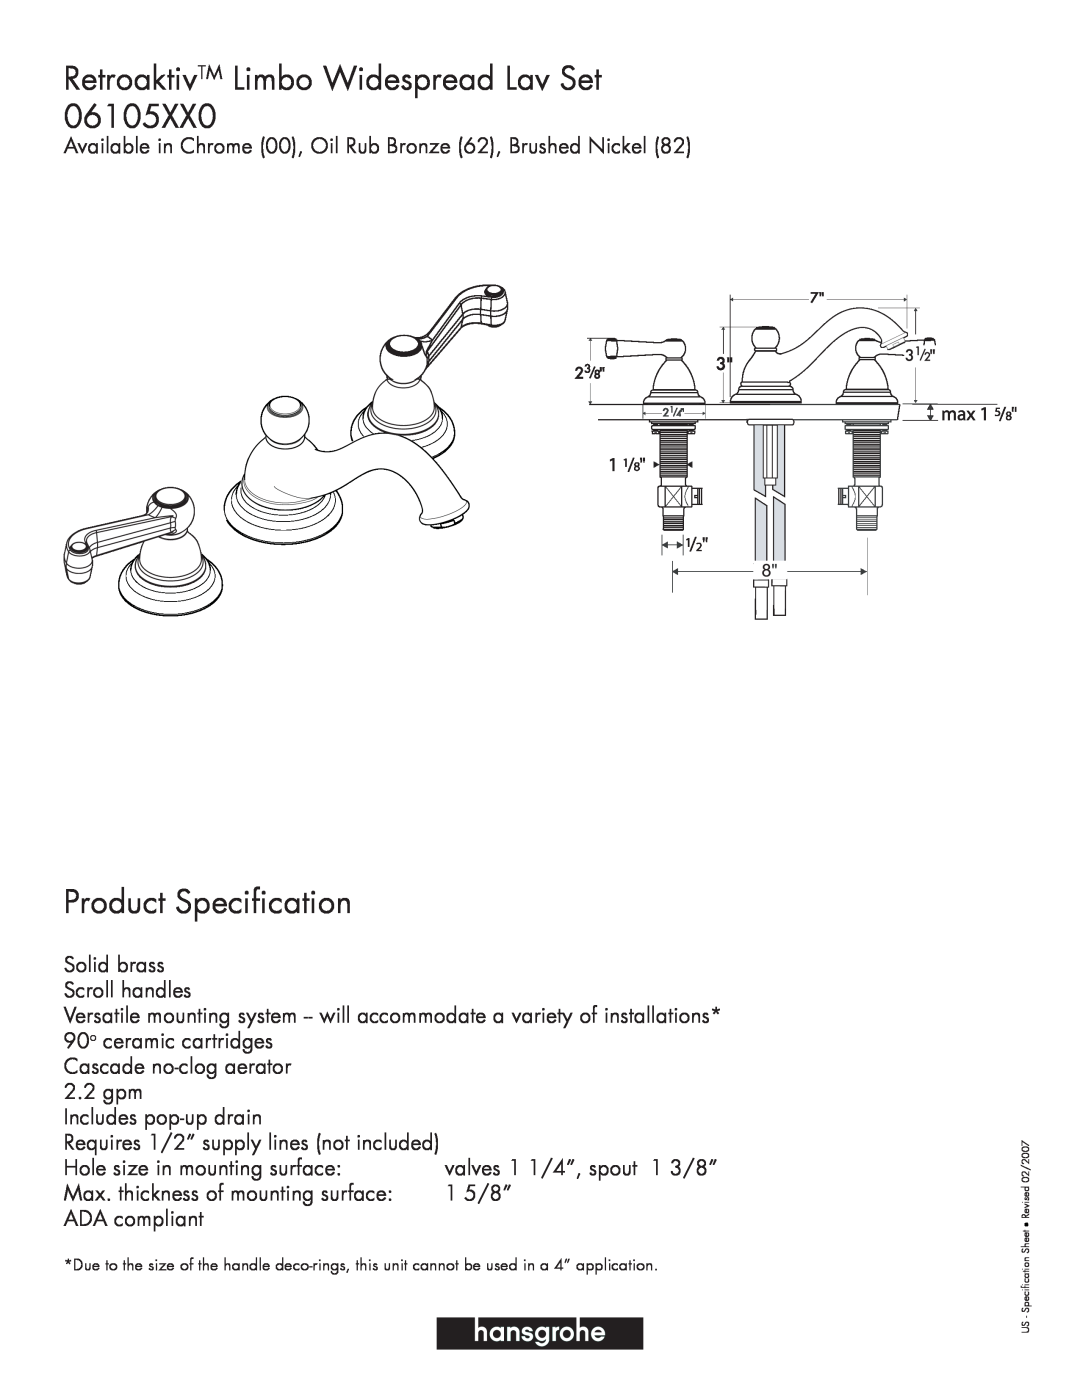 Axor 06105XX0 specifications RetroaktivTM Limbo Widespread Lav Set, Product Specification 